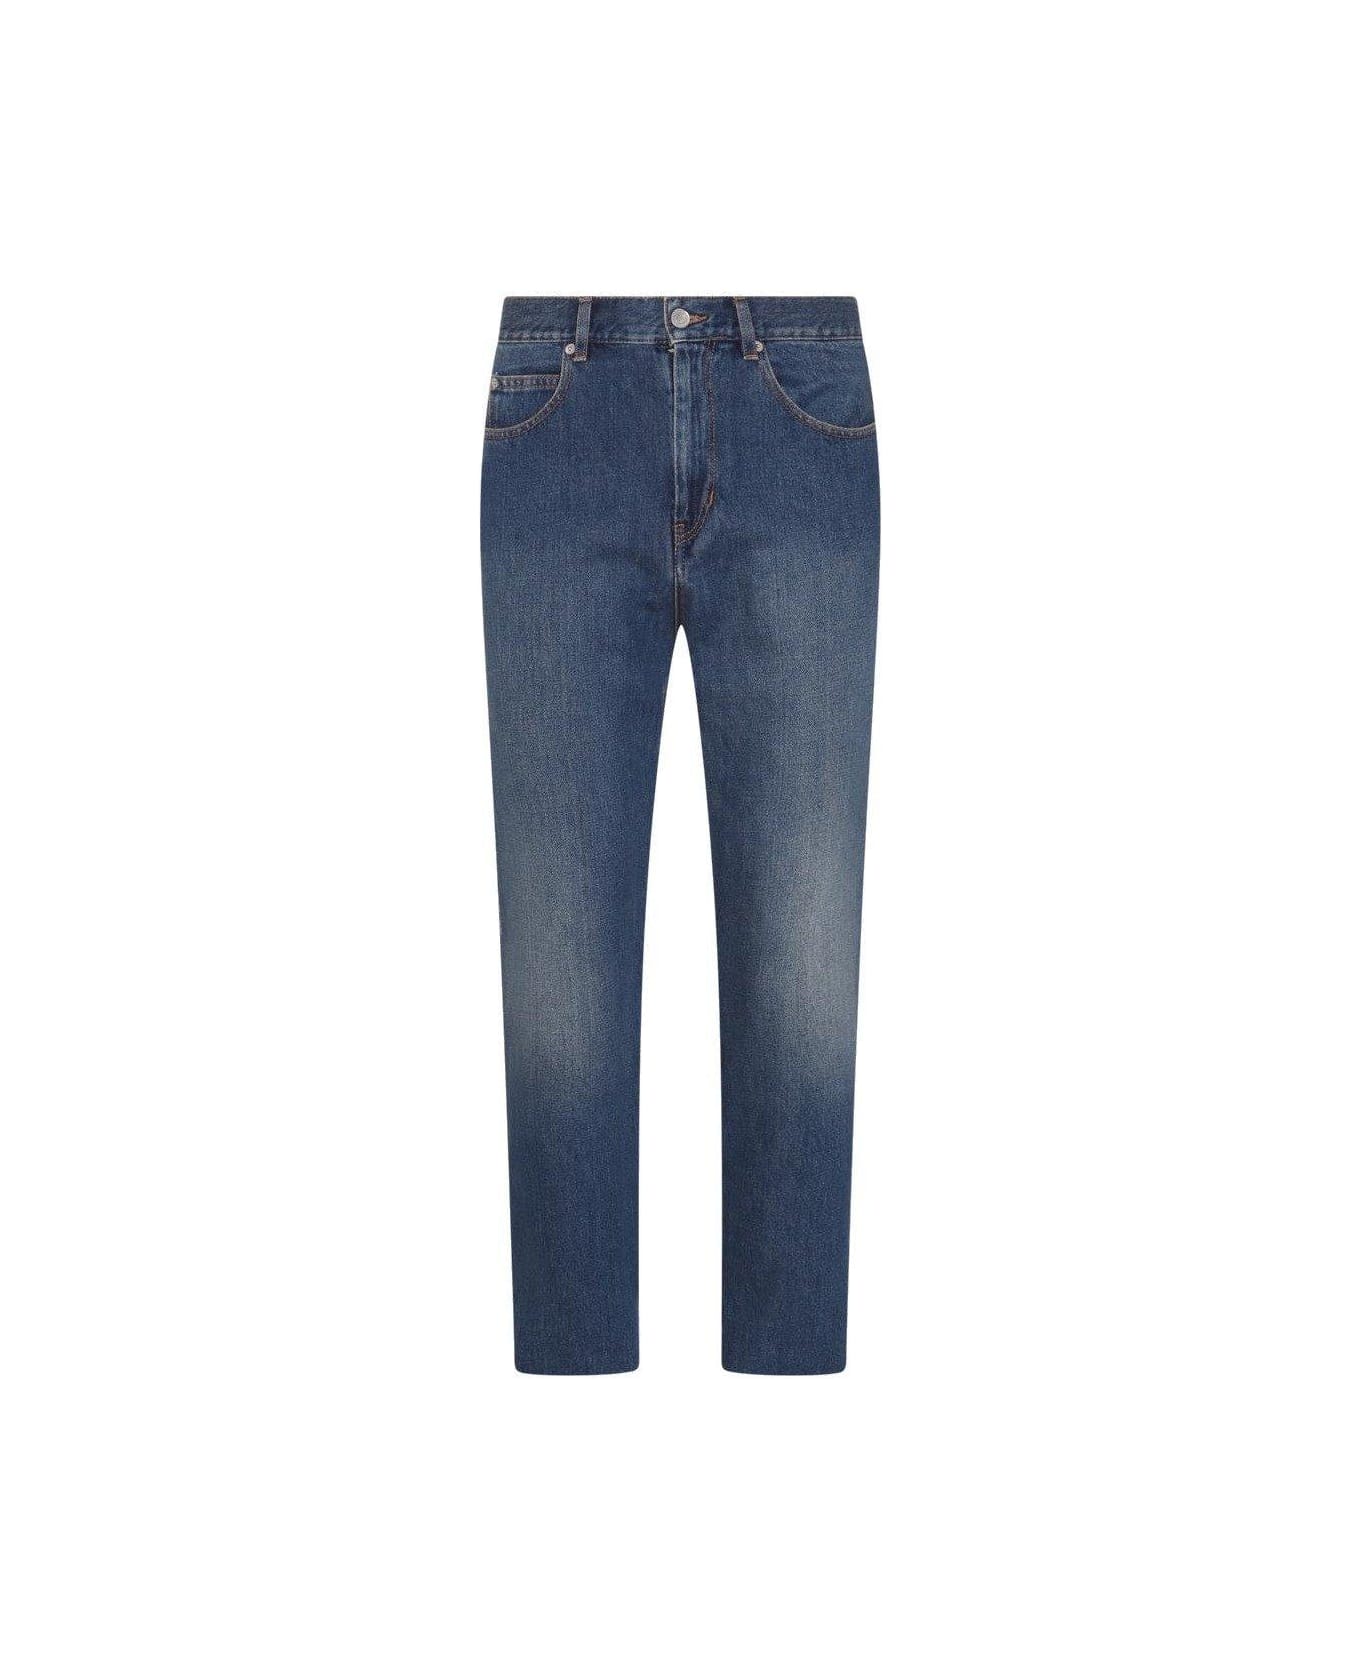 Isabel Marant Skinny Cut Jeans